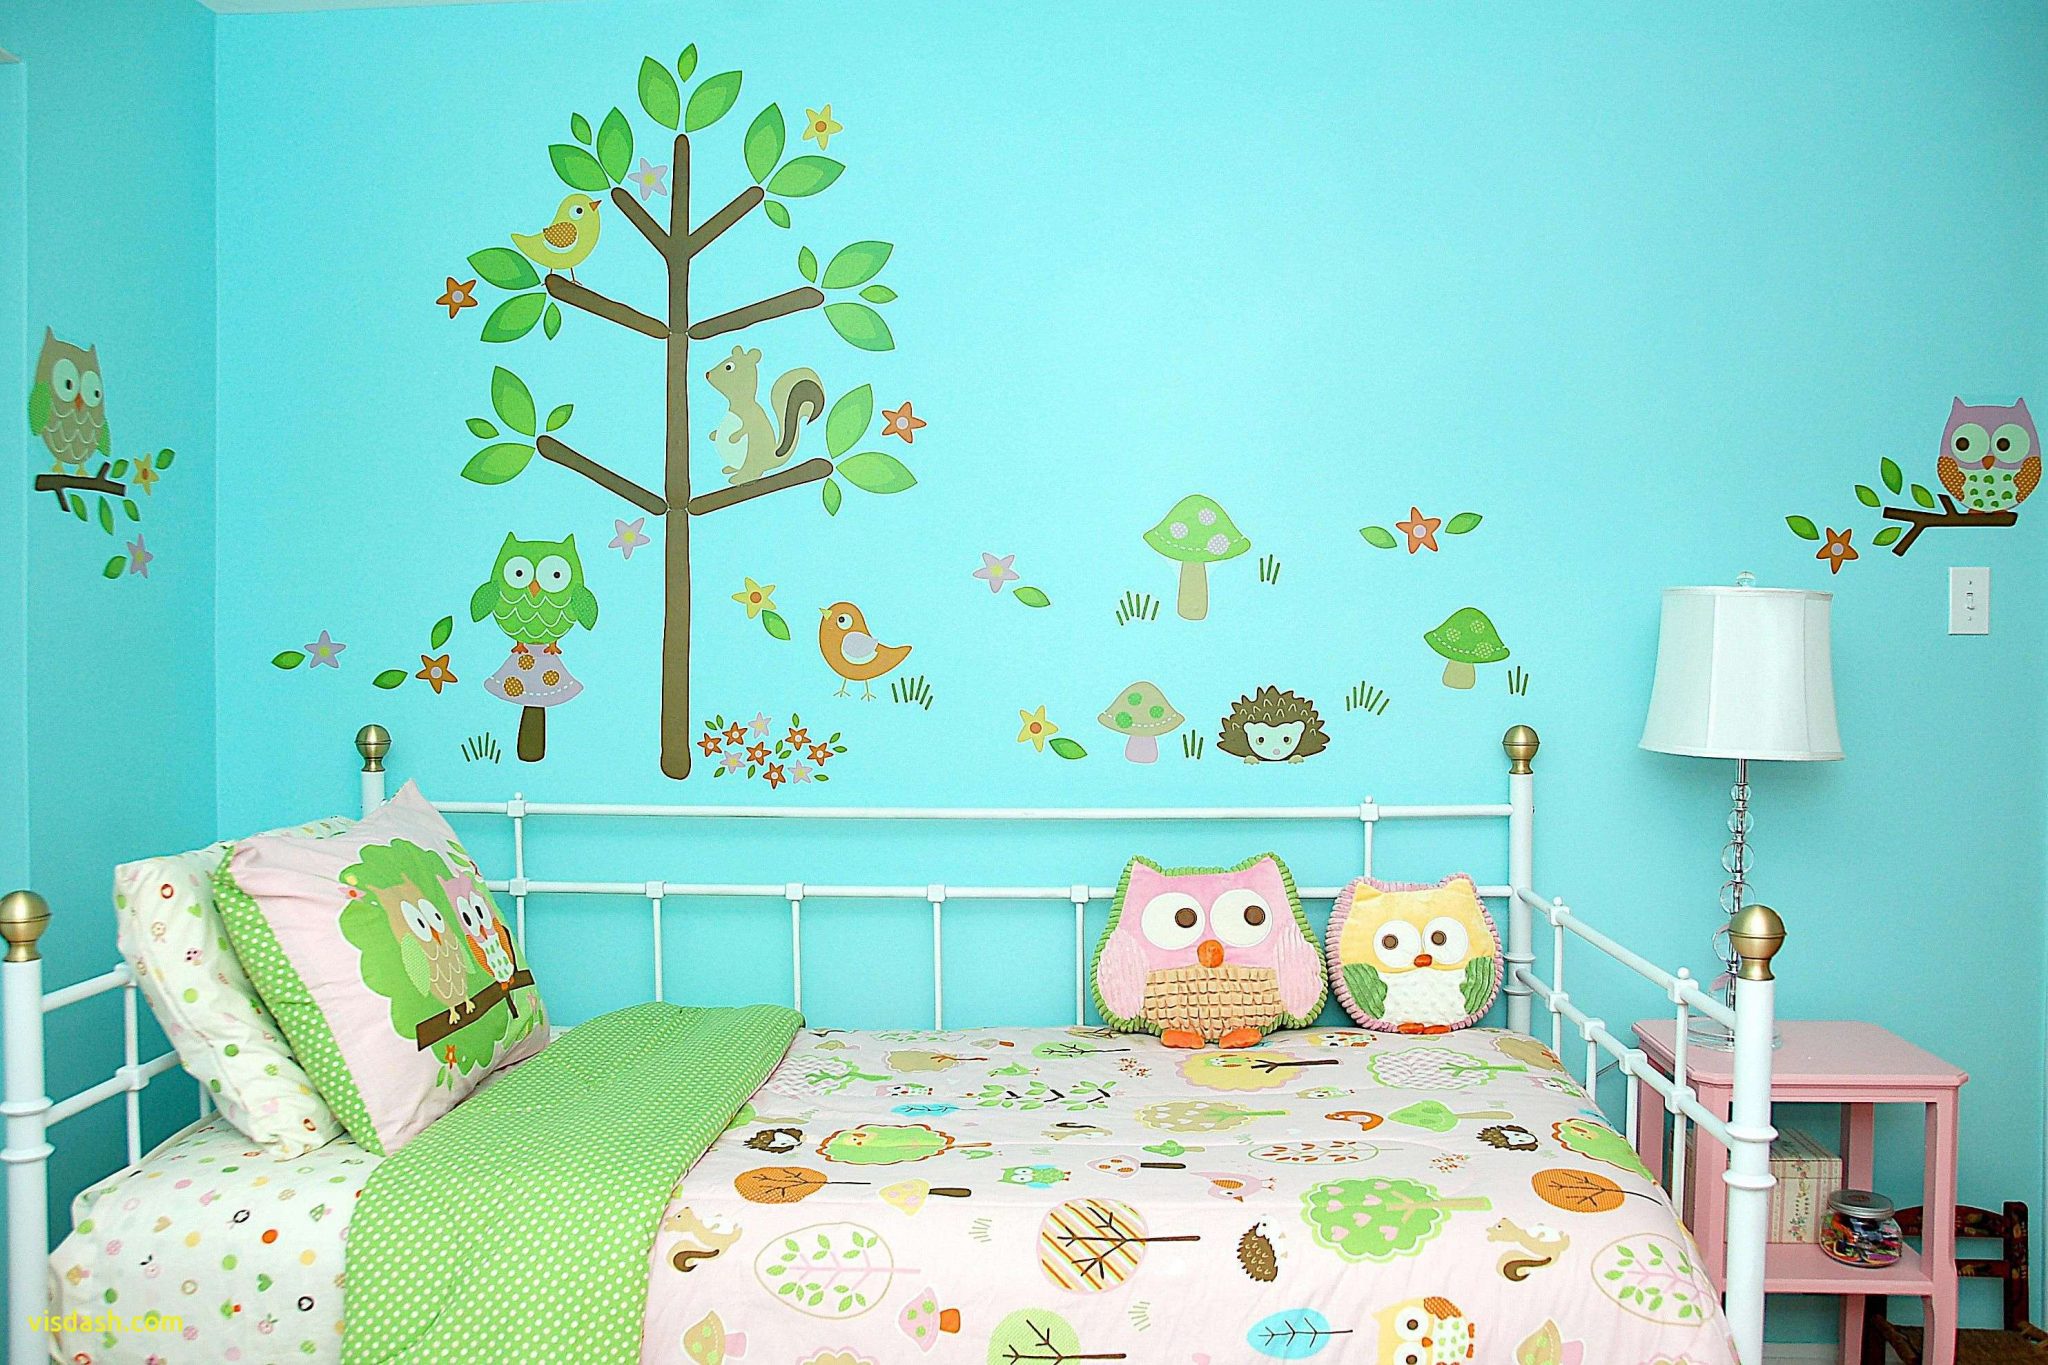 wallpaper kamar anak,room,green,wall,product,bedroom